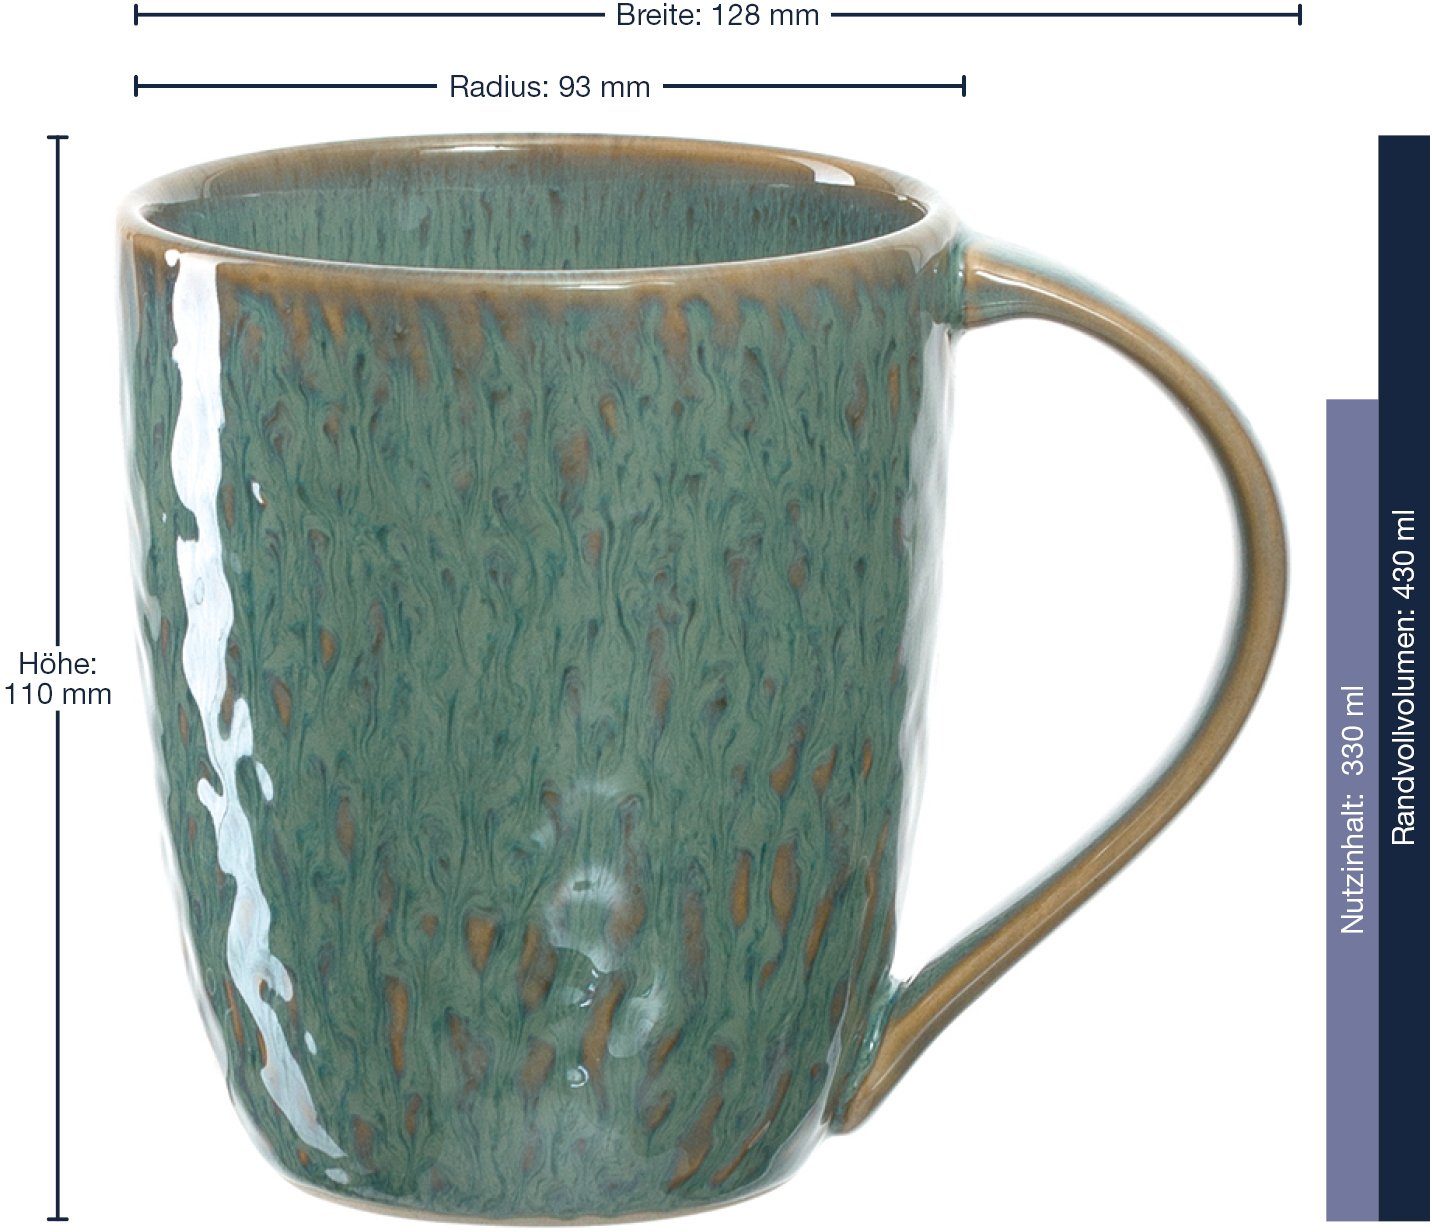 LEONARDO Becher Matera, Keramik, 430 grün ml, 6-teilig